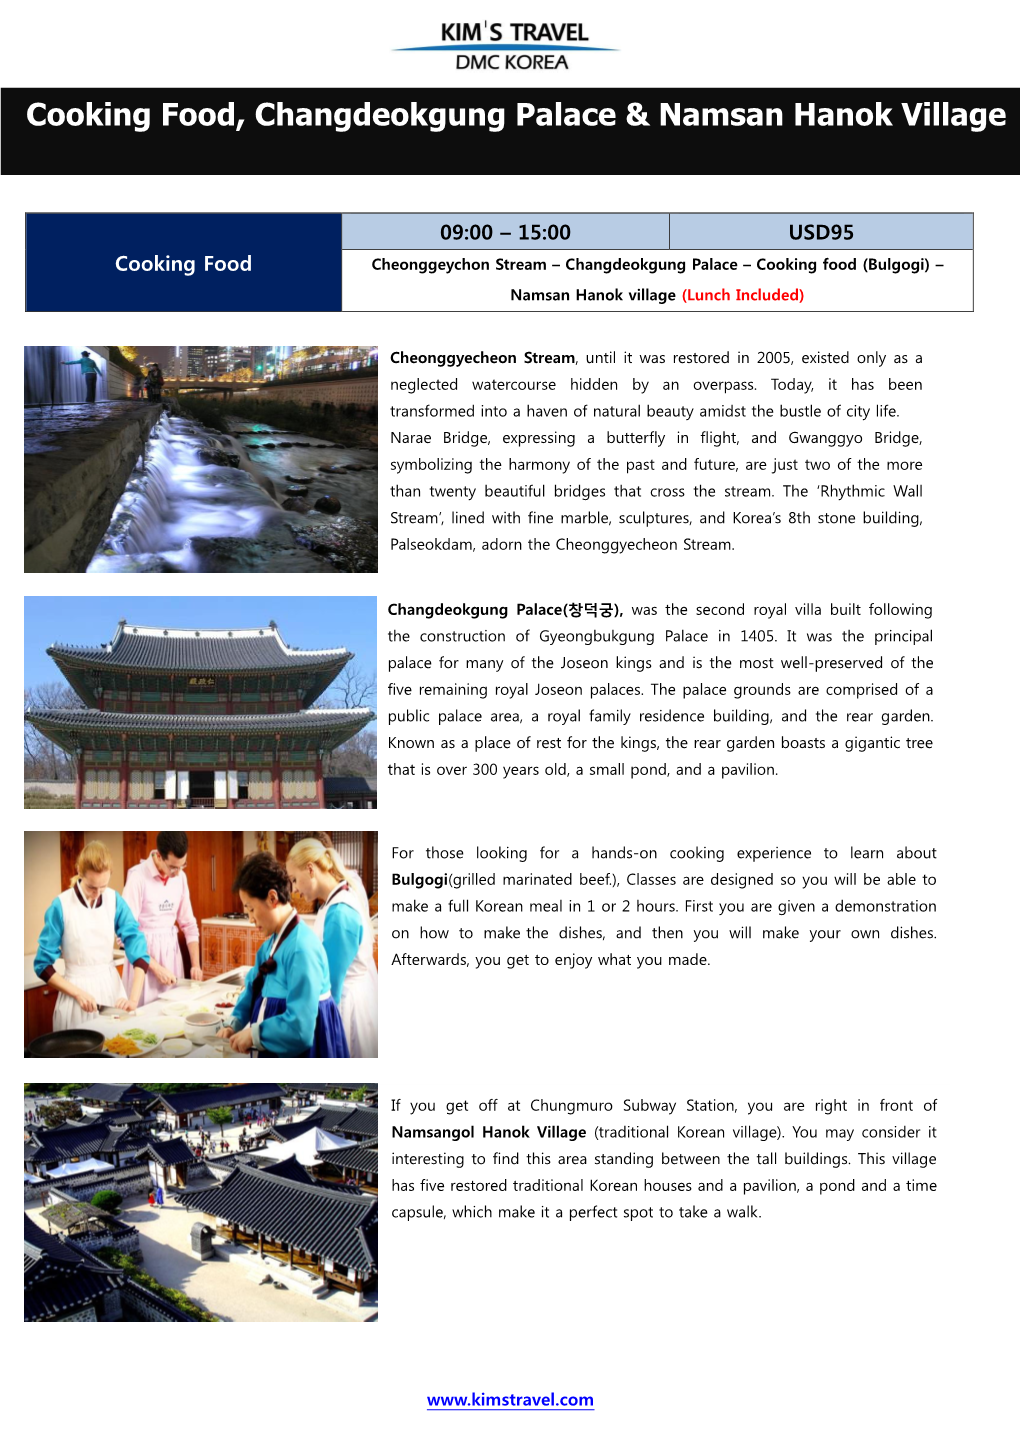 Cooking Food, Changdeokgung Palace & Namsan Hanok Village